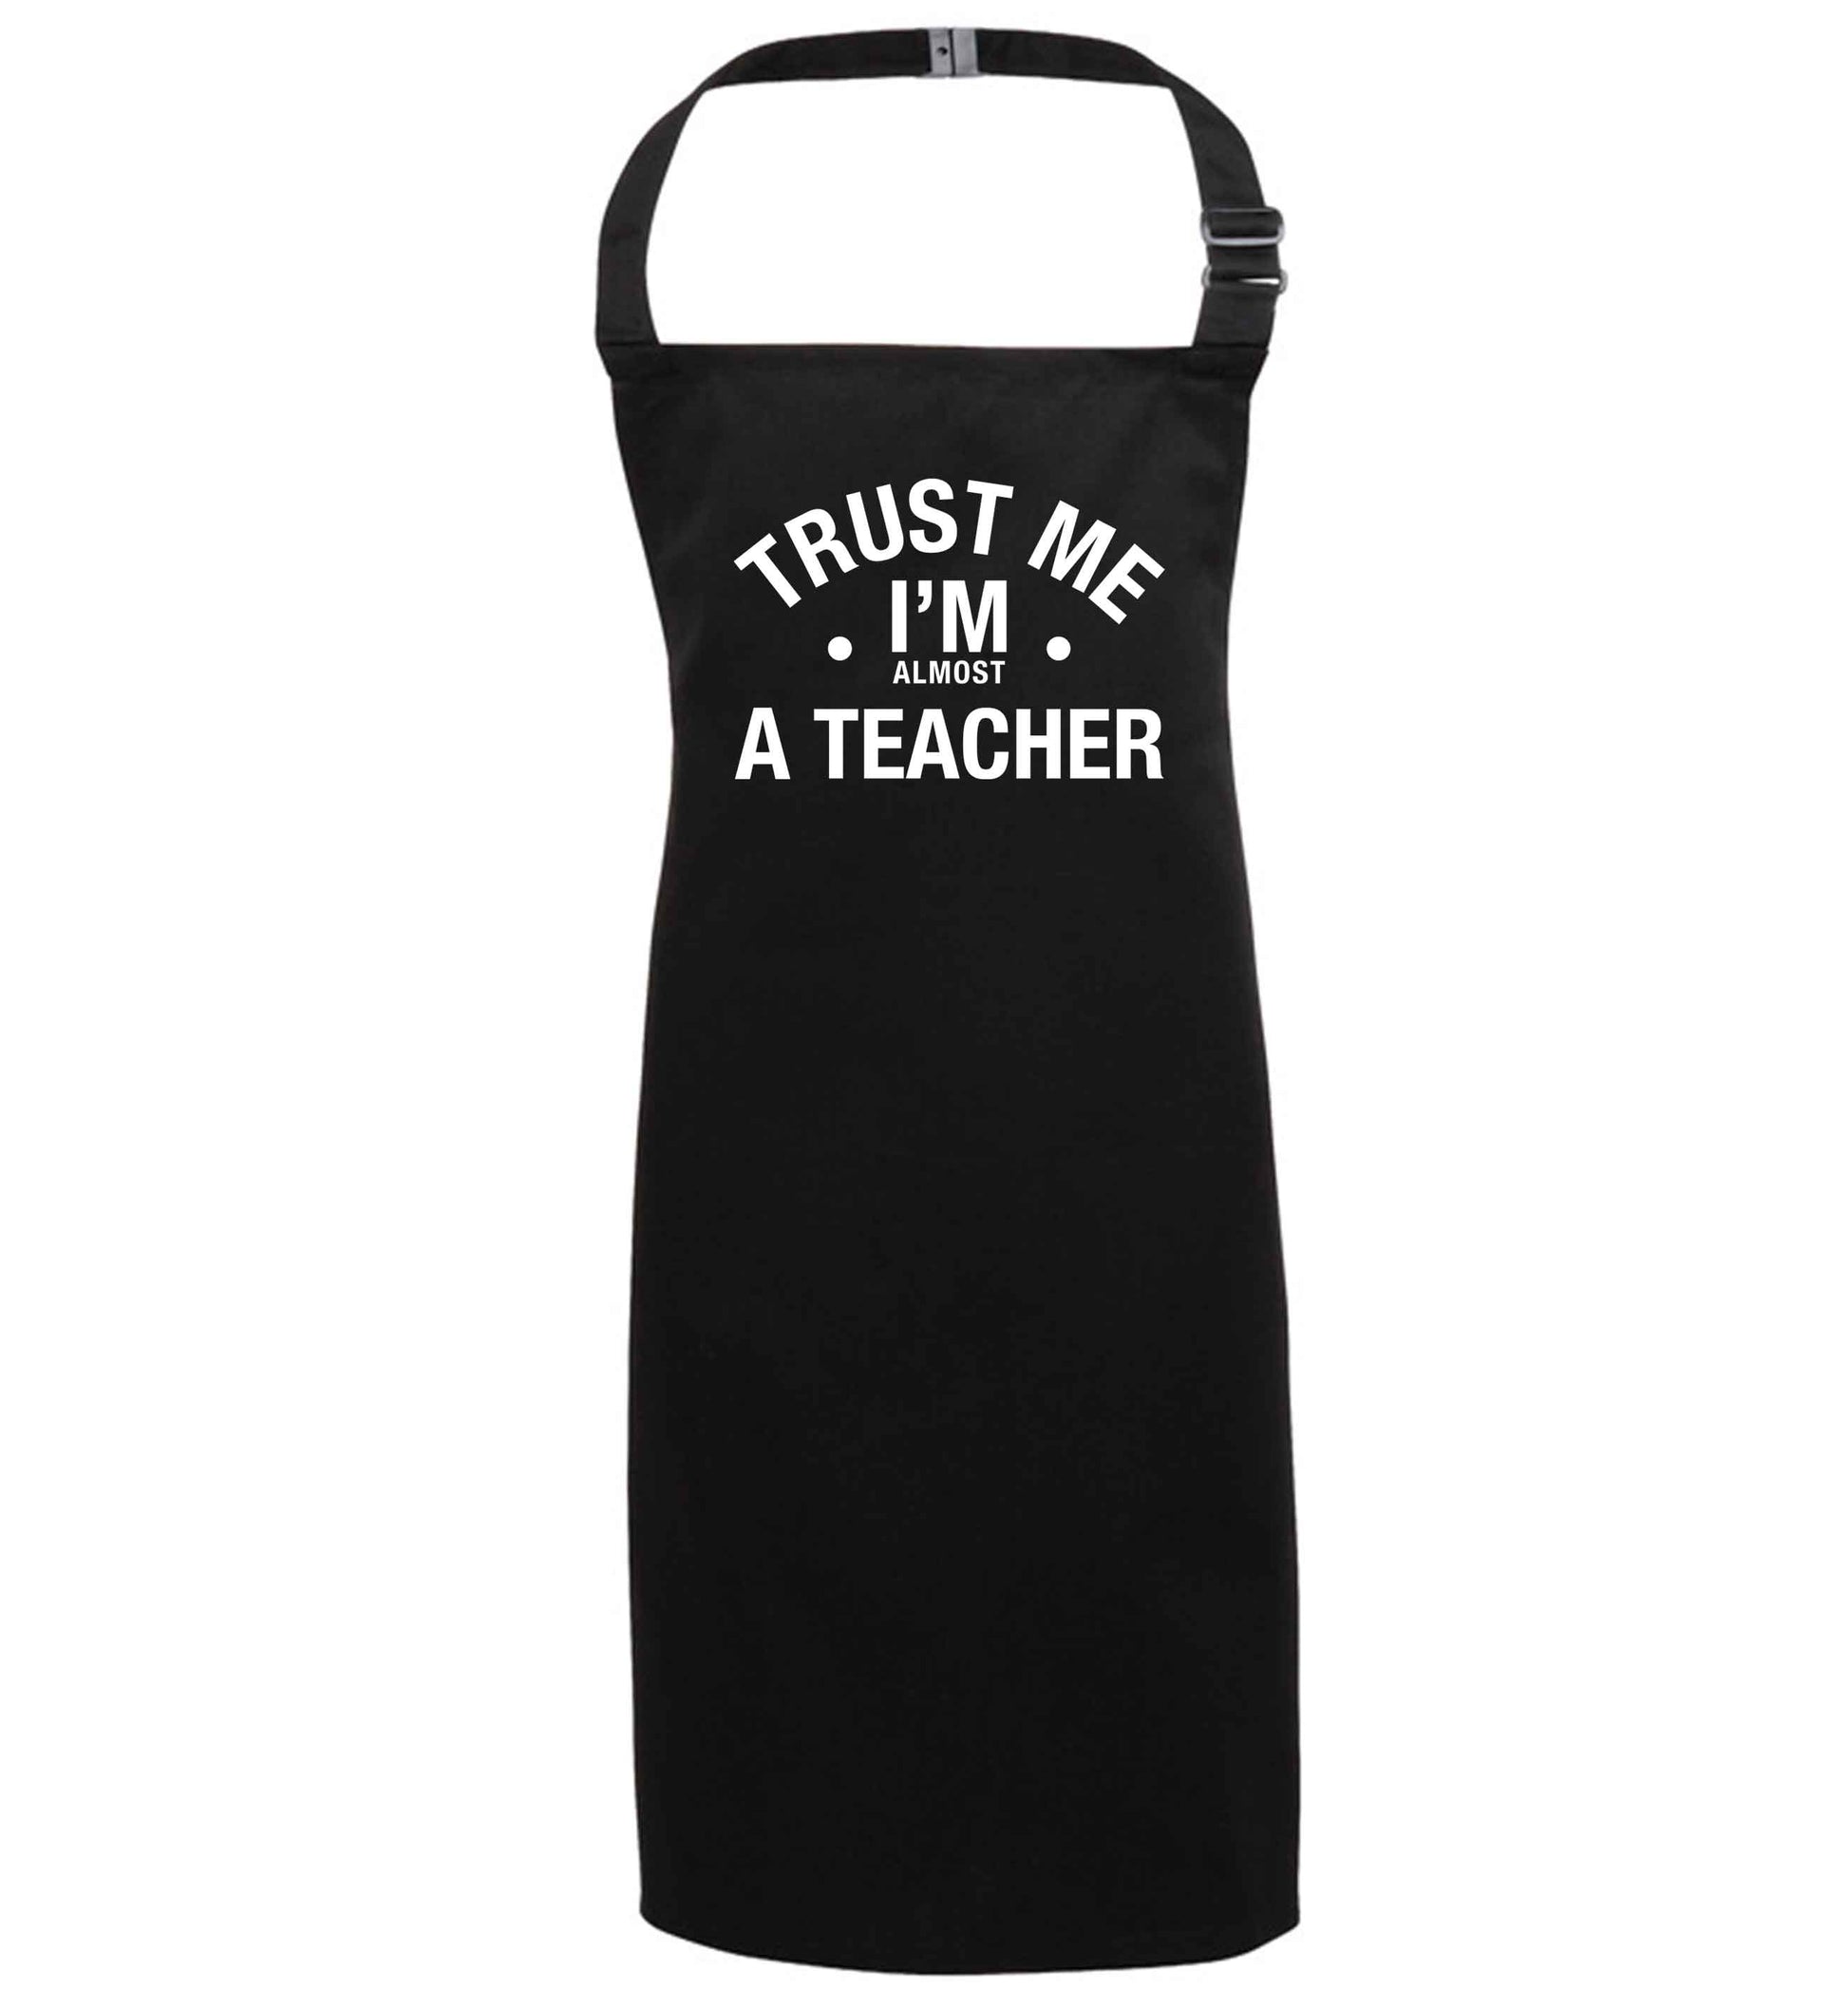 Trust me I'm almost a teacher black apron 7-10 years